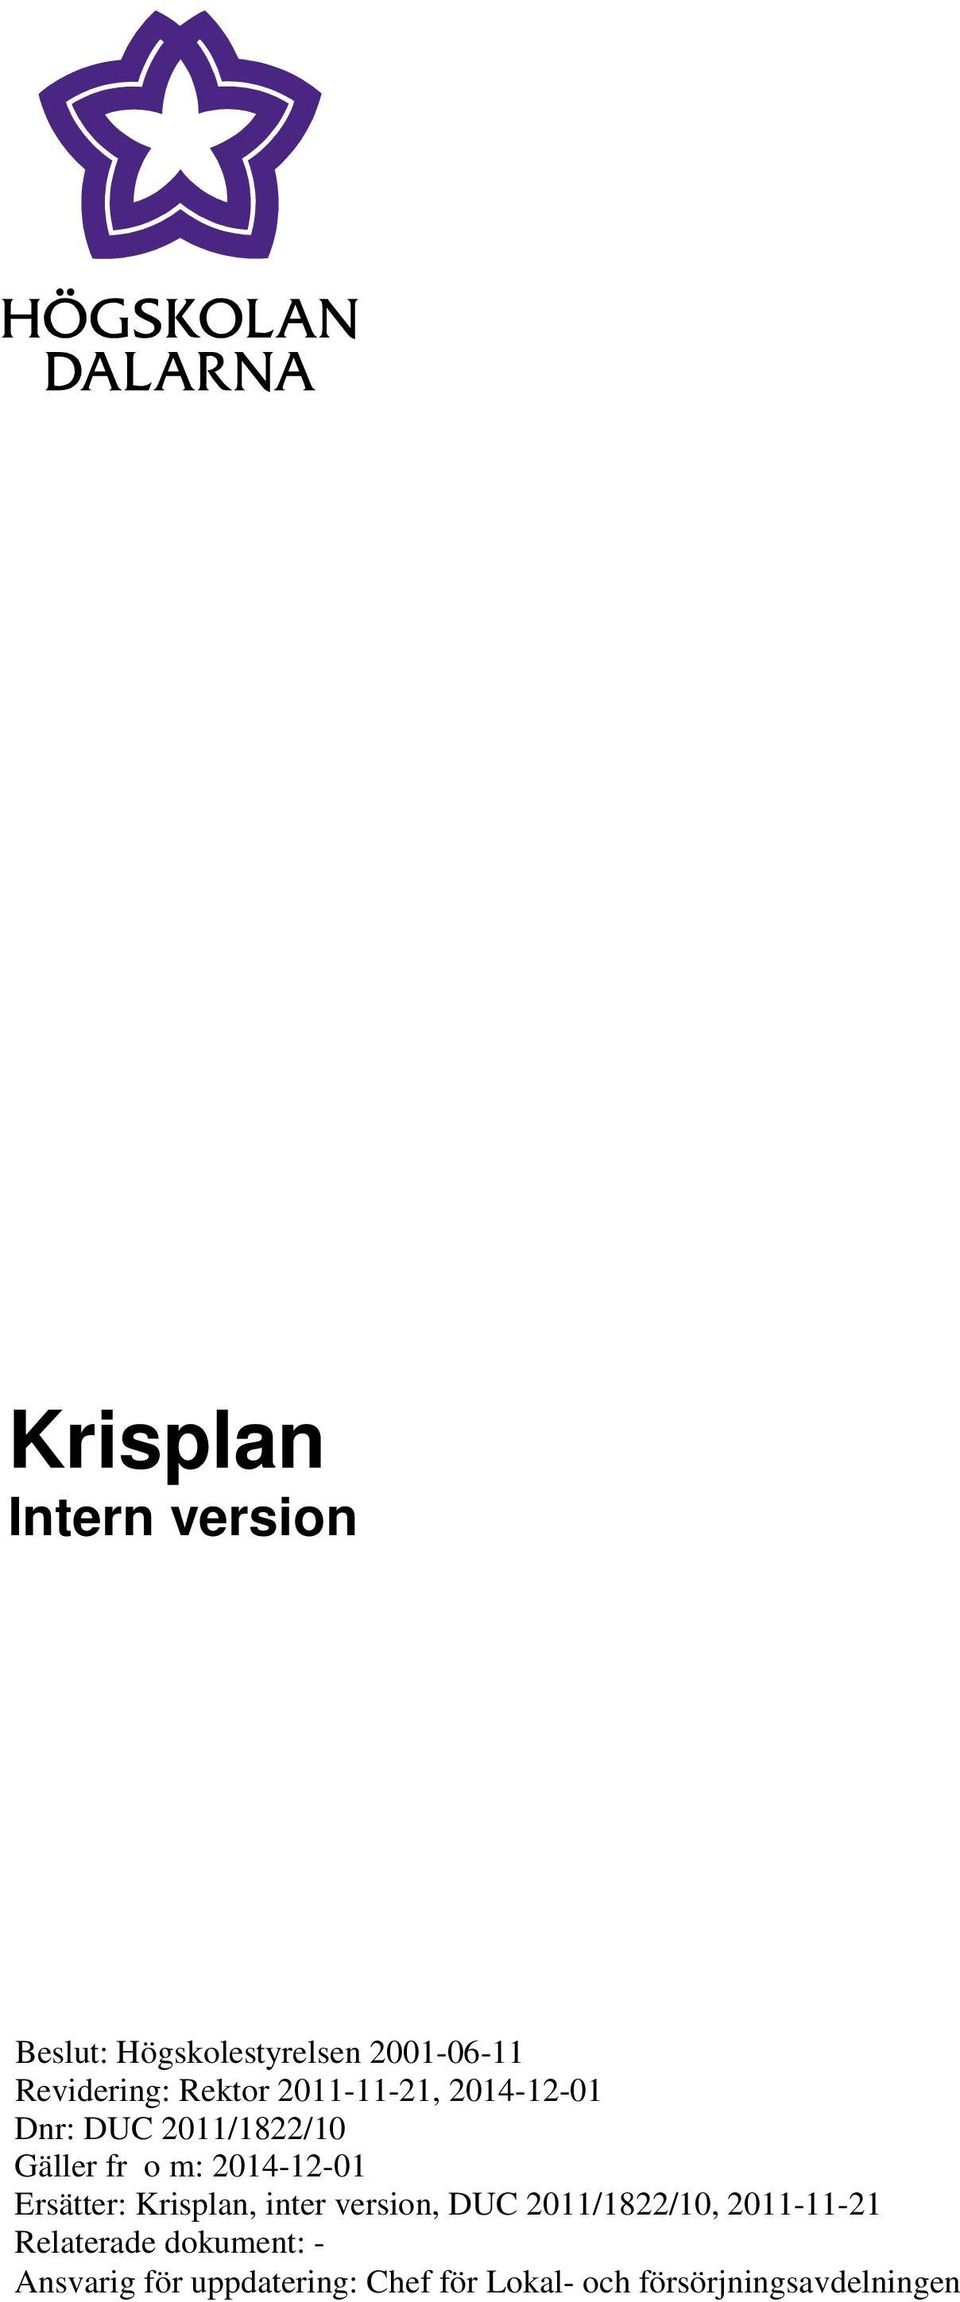 2014-12-01 Ersätter: Krisplan, inter version, DUC 2011/1822/10, 2011-11-21